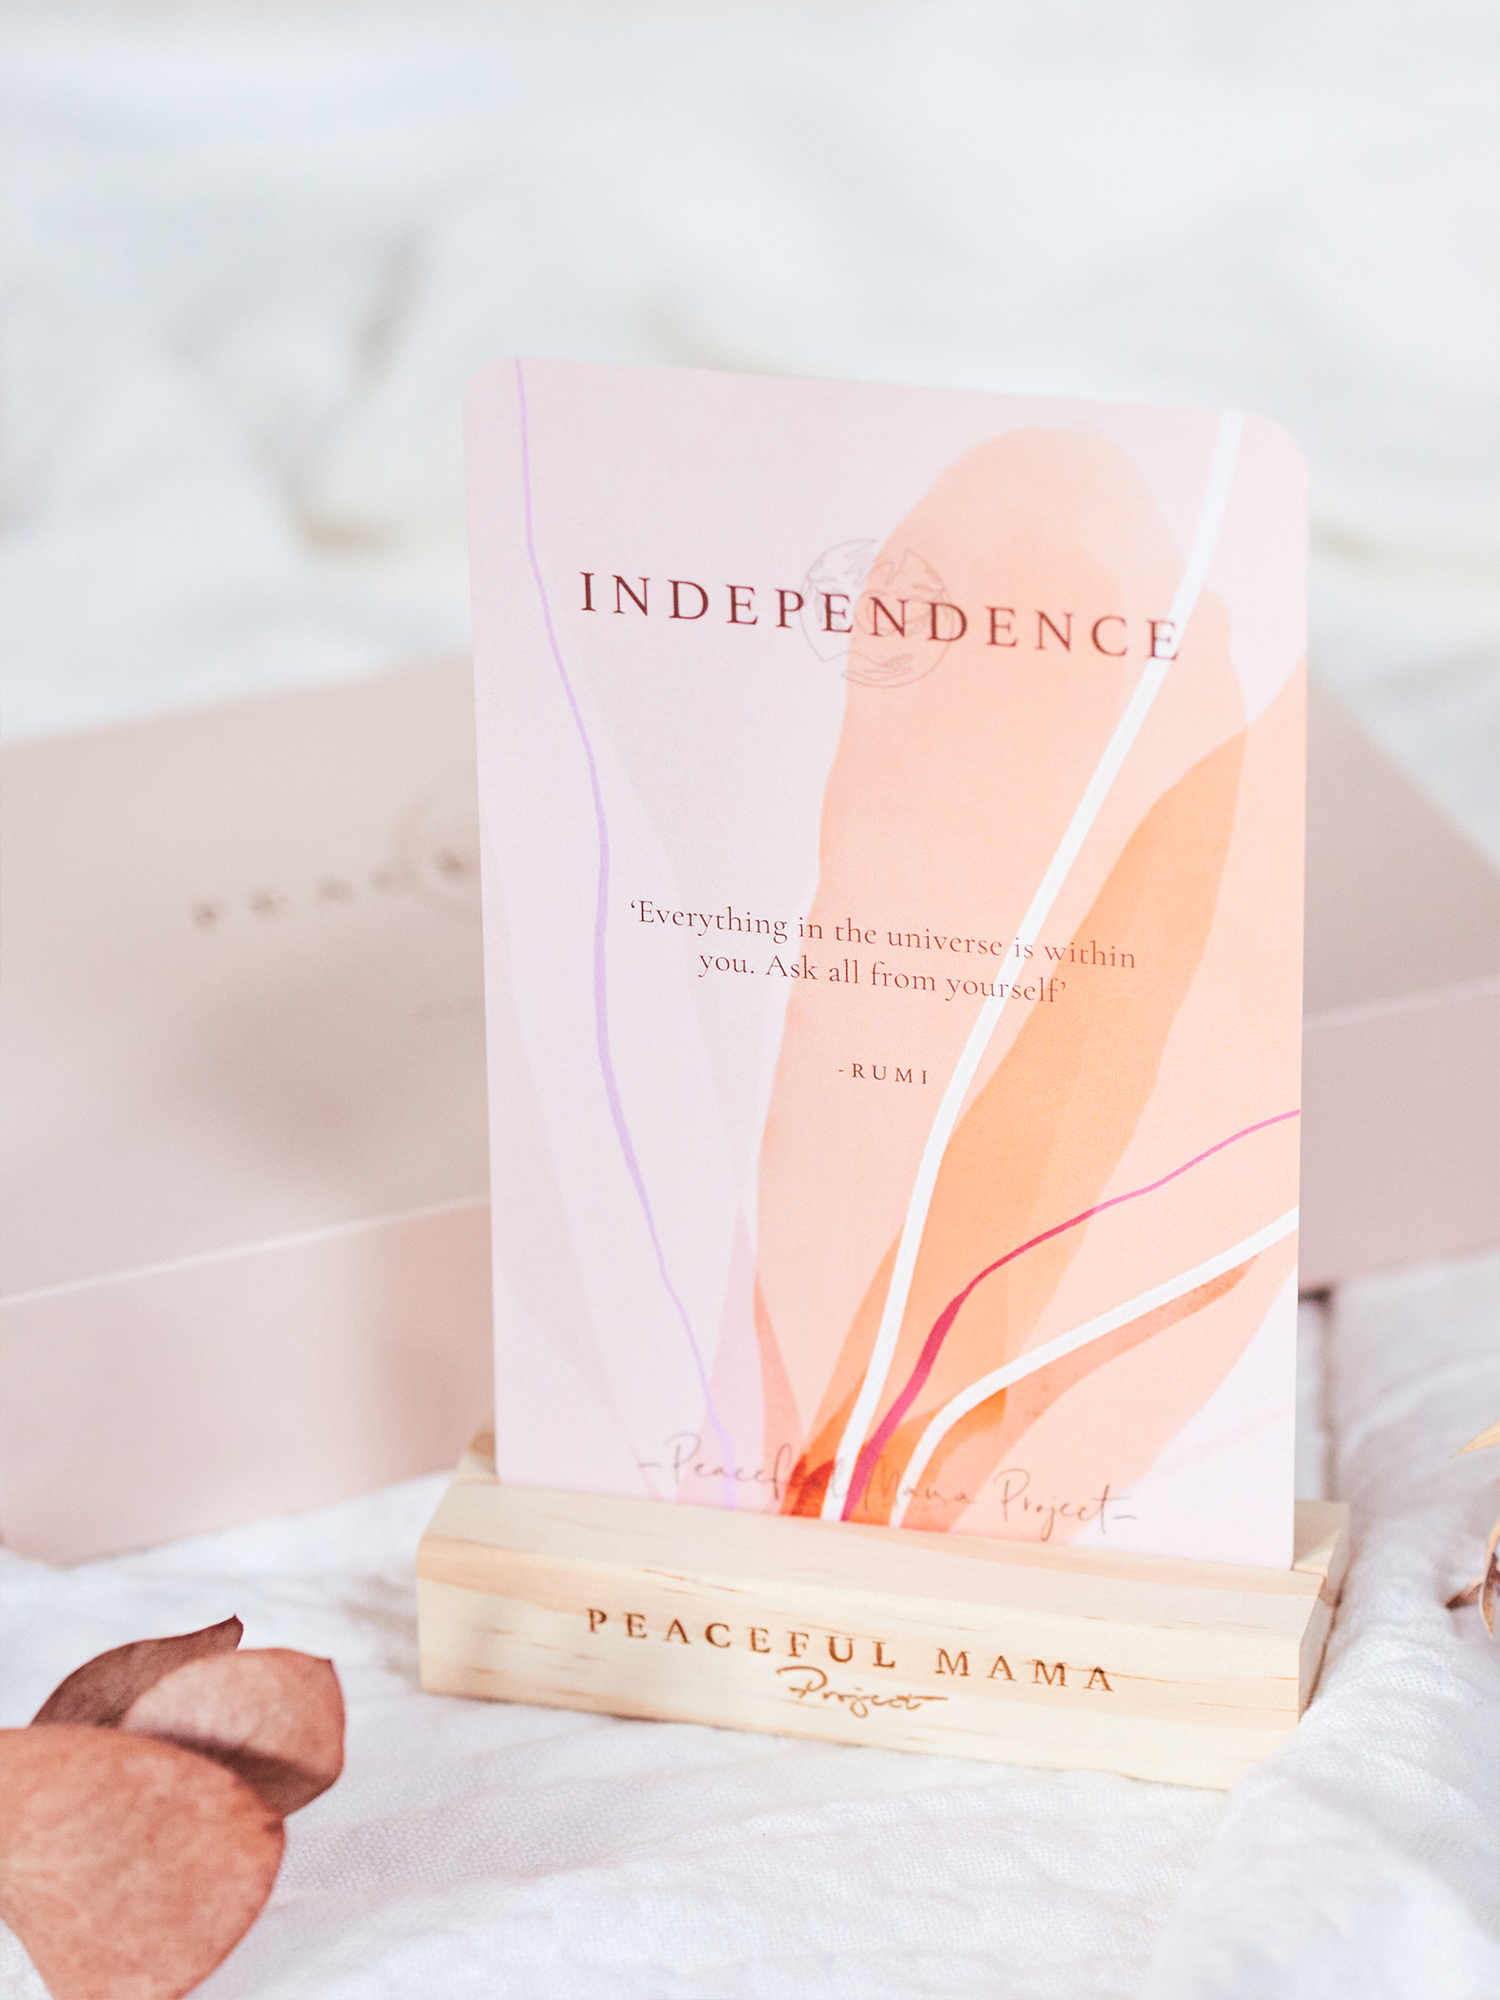 peaceful mama card bundle | peaceful mama project